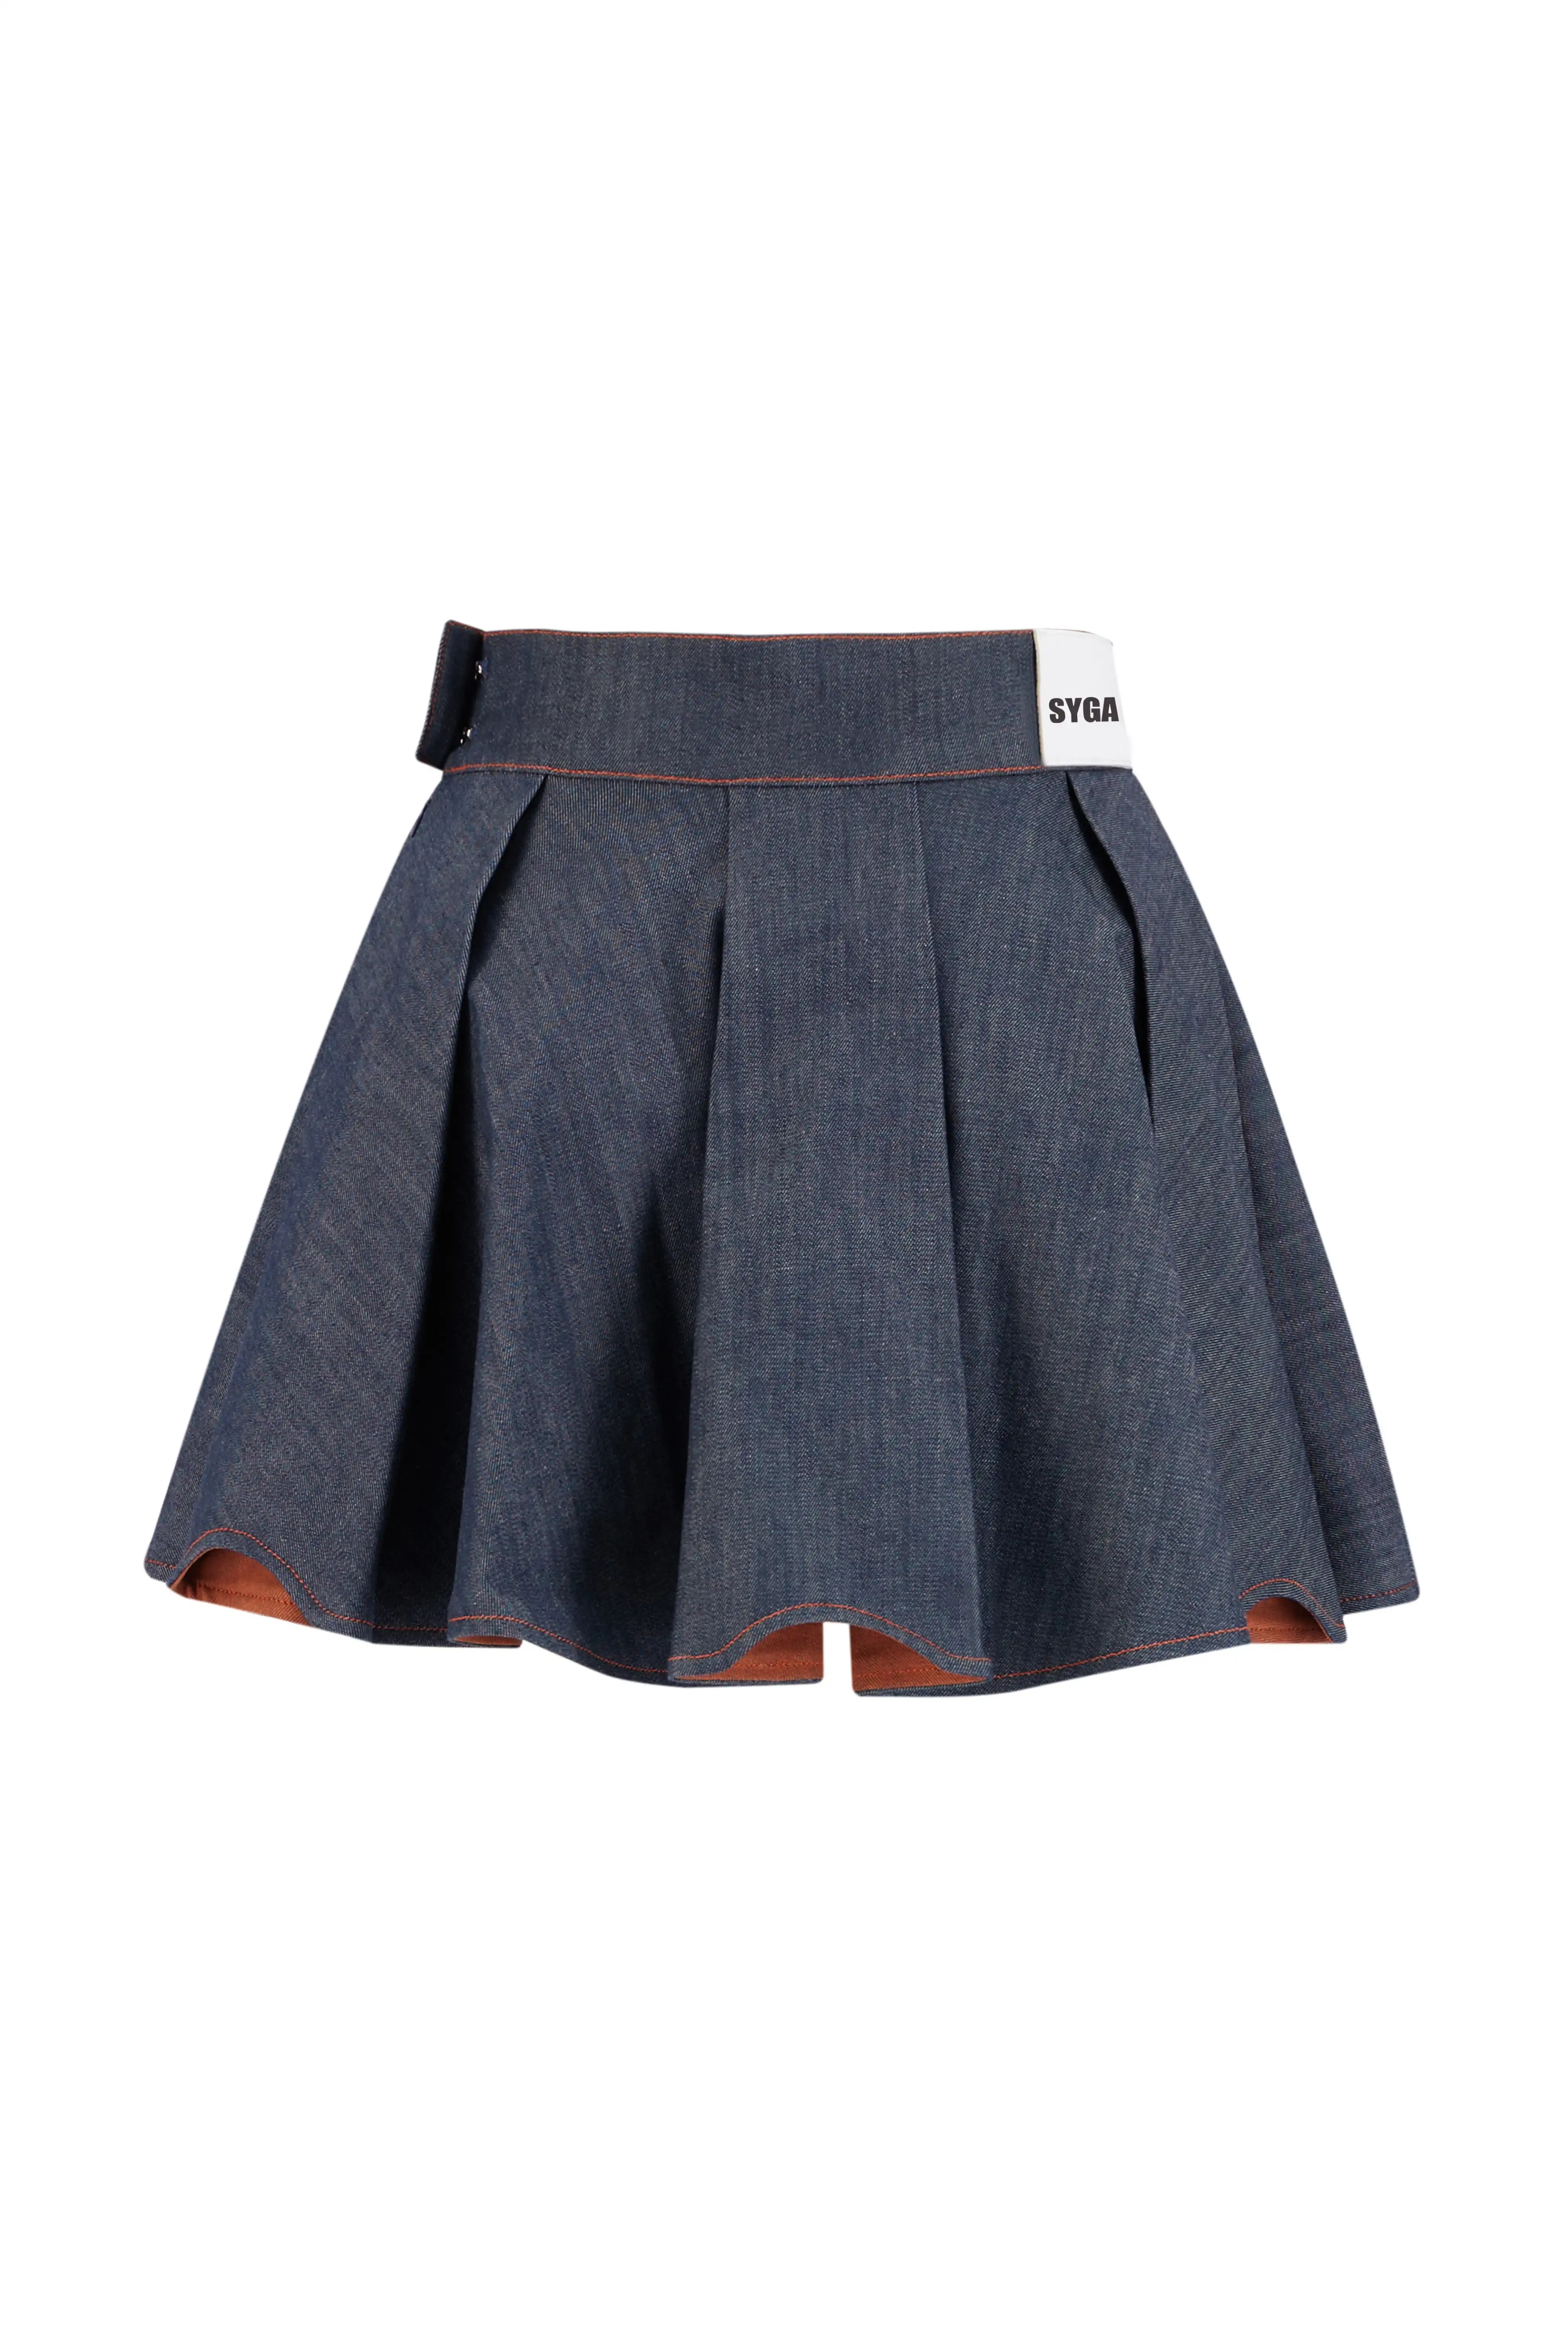 Dropout Nun Pleated Raw Denim Skirt 